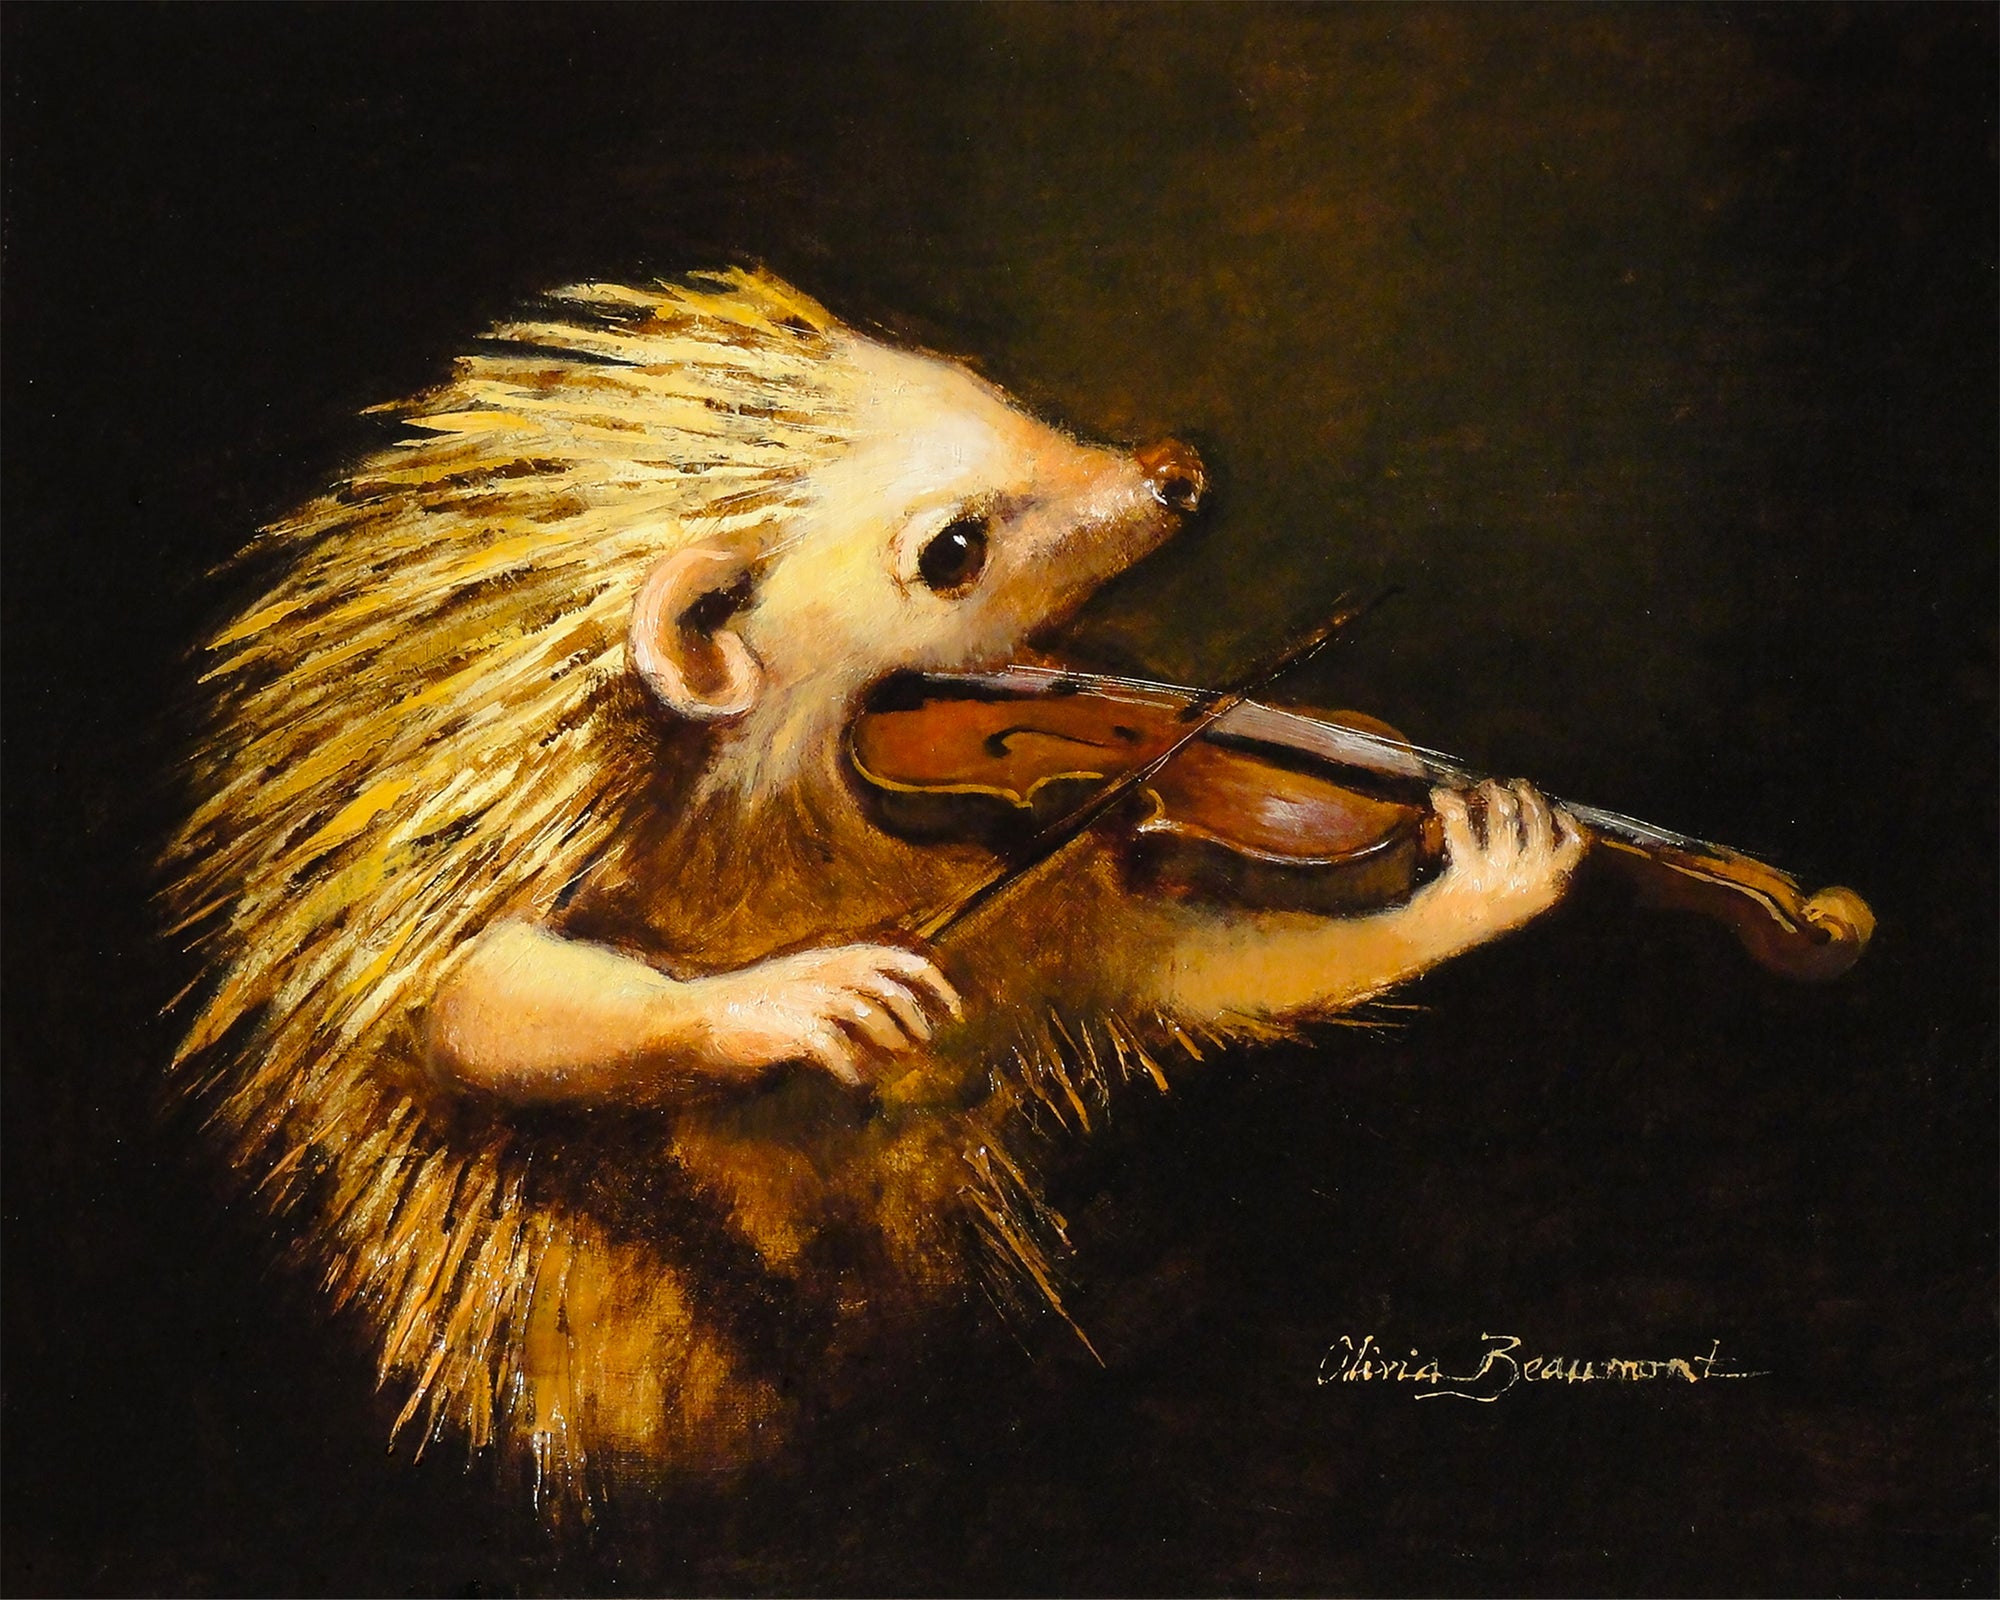 Serenade - hedgehog prints